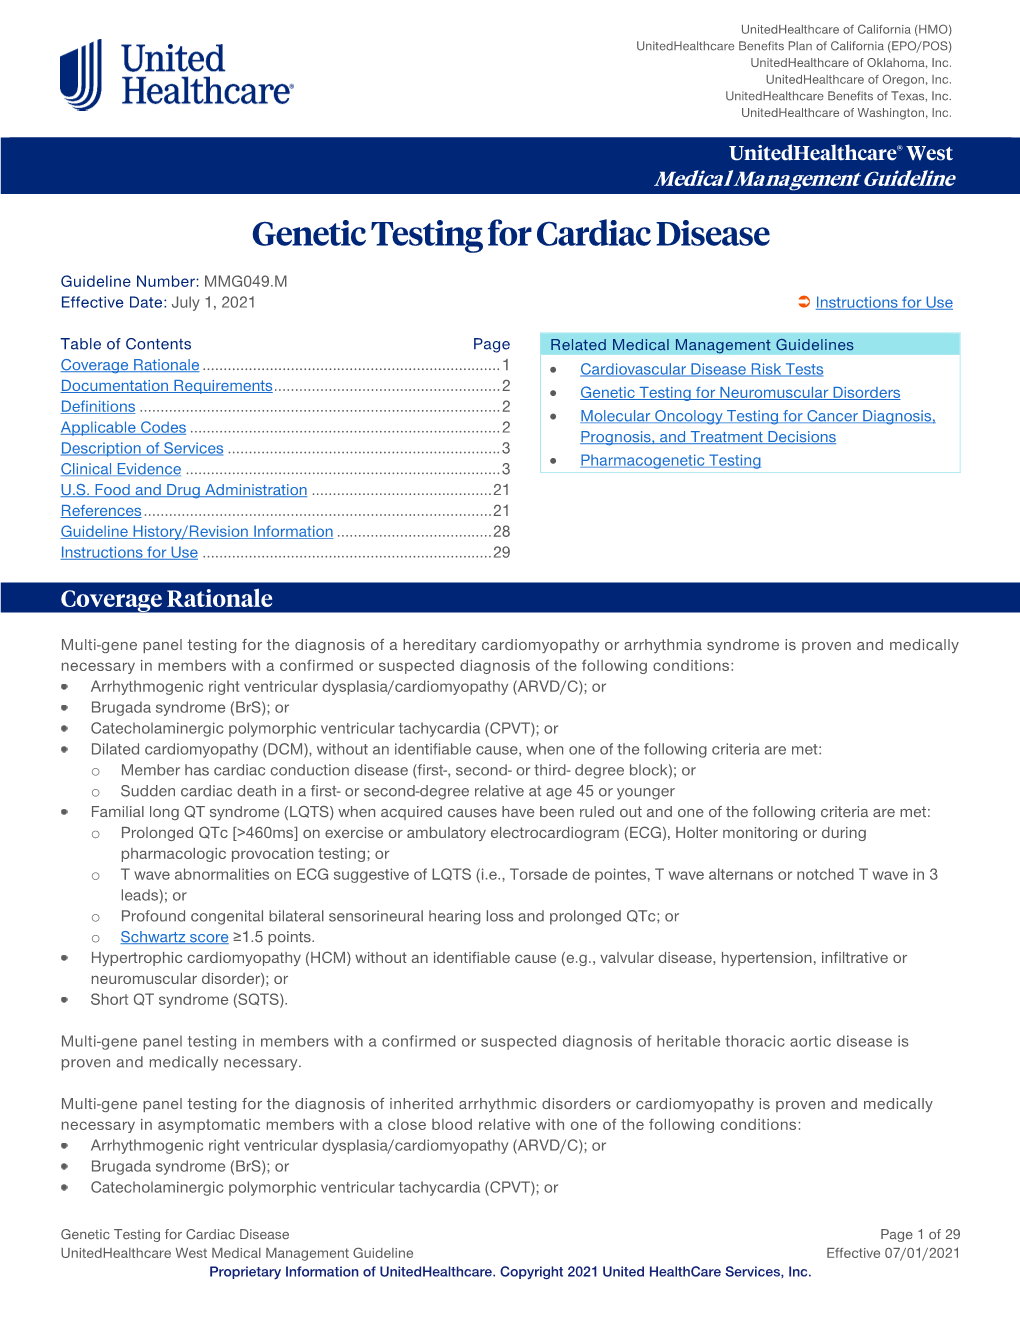 Genetic Testing for Cardiac Disease – Unitedhealthcare West Medical Management Guideline